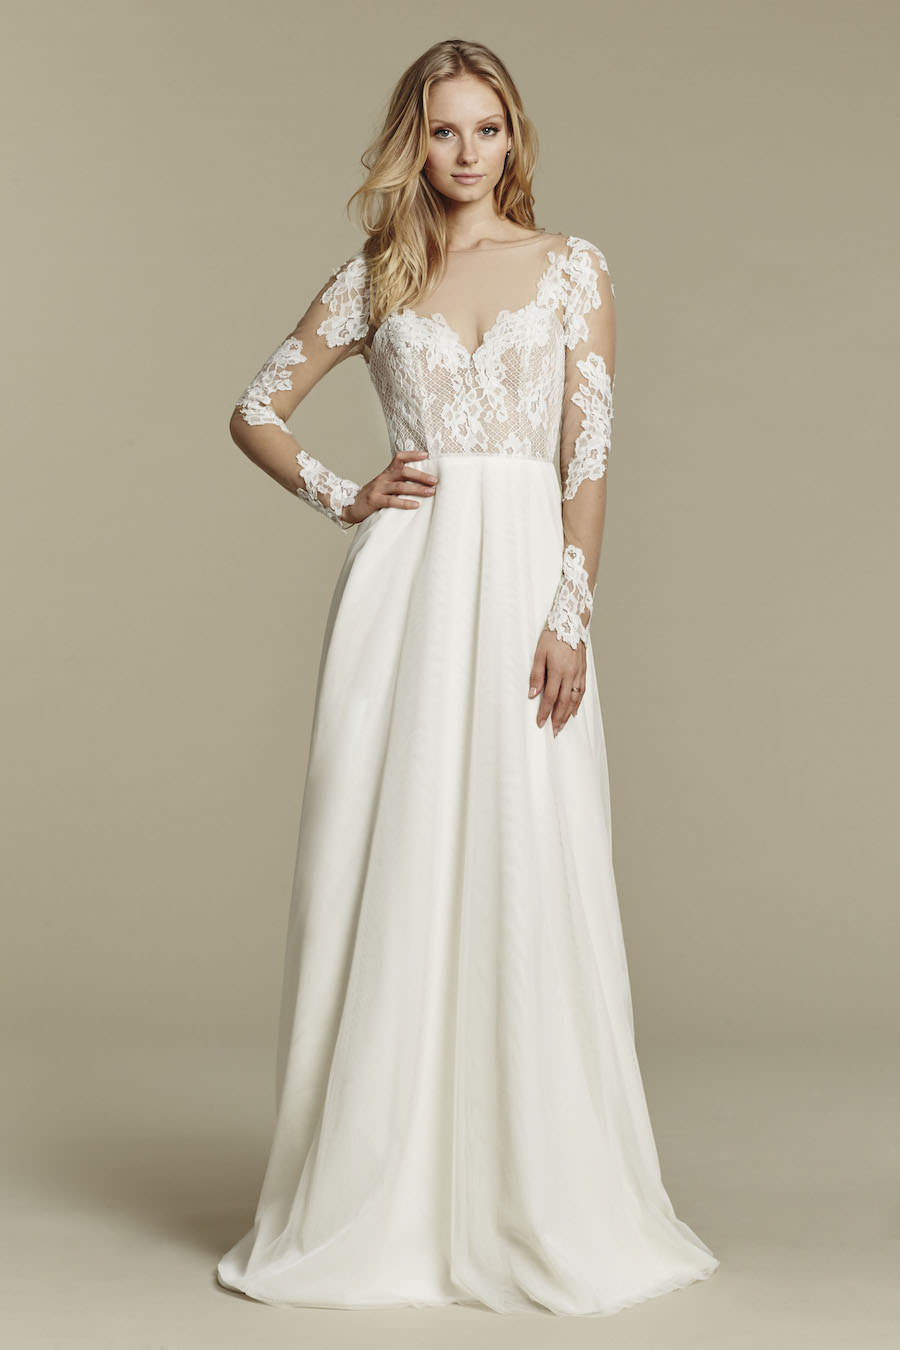 Ginger Dress | Blush by Hayley Paige Lace Wedding Dress from Blush Bridal Sarasota